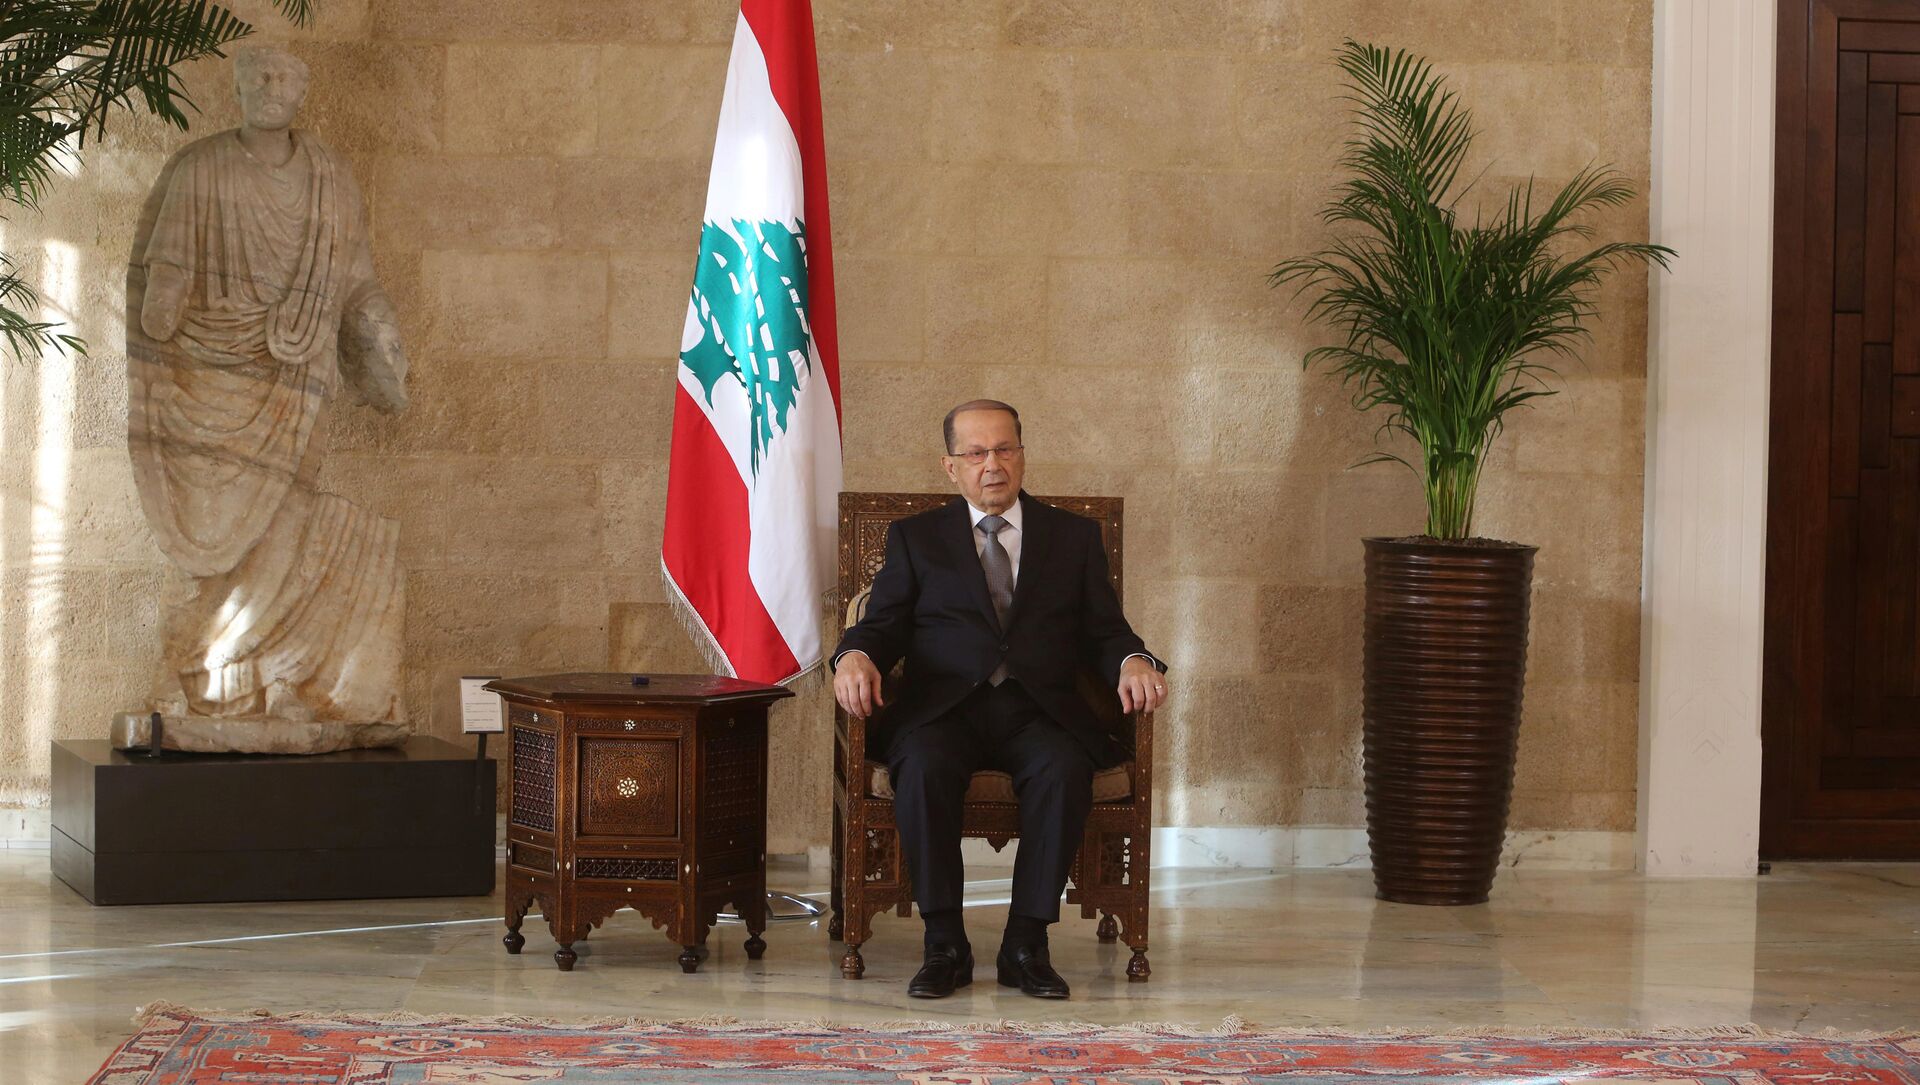 Newly elected Lebanese president Michel Aoun sits on the president's chair inside the presidential palace in Baabda, near Beirut, Lebanon October 31, 2016 - Sputnik Afrique, 1920, 31.03.2021